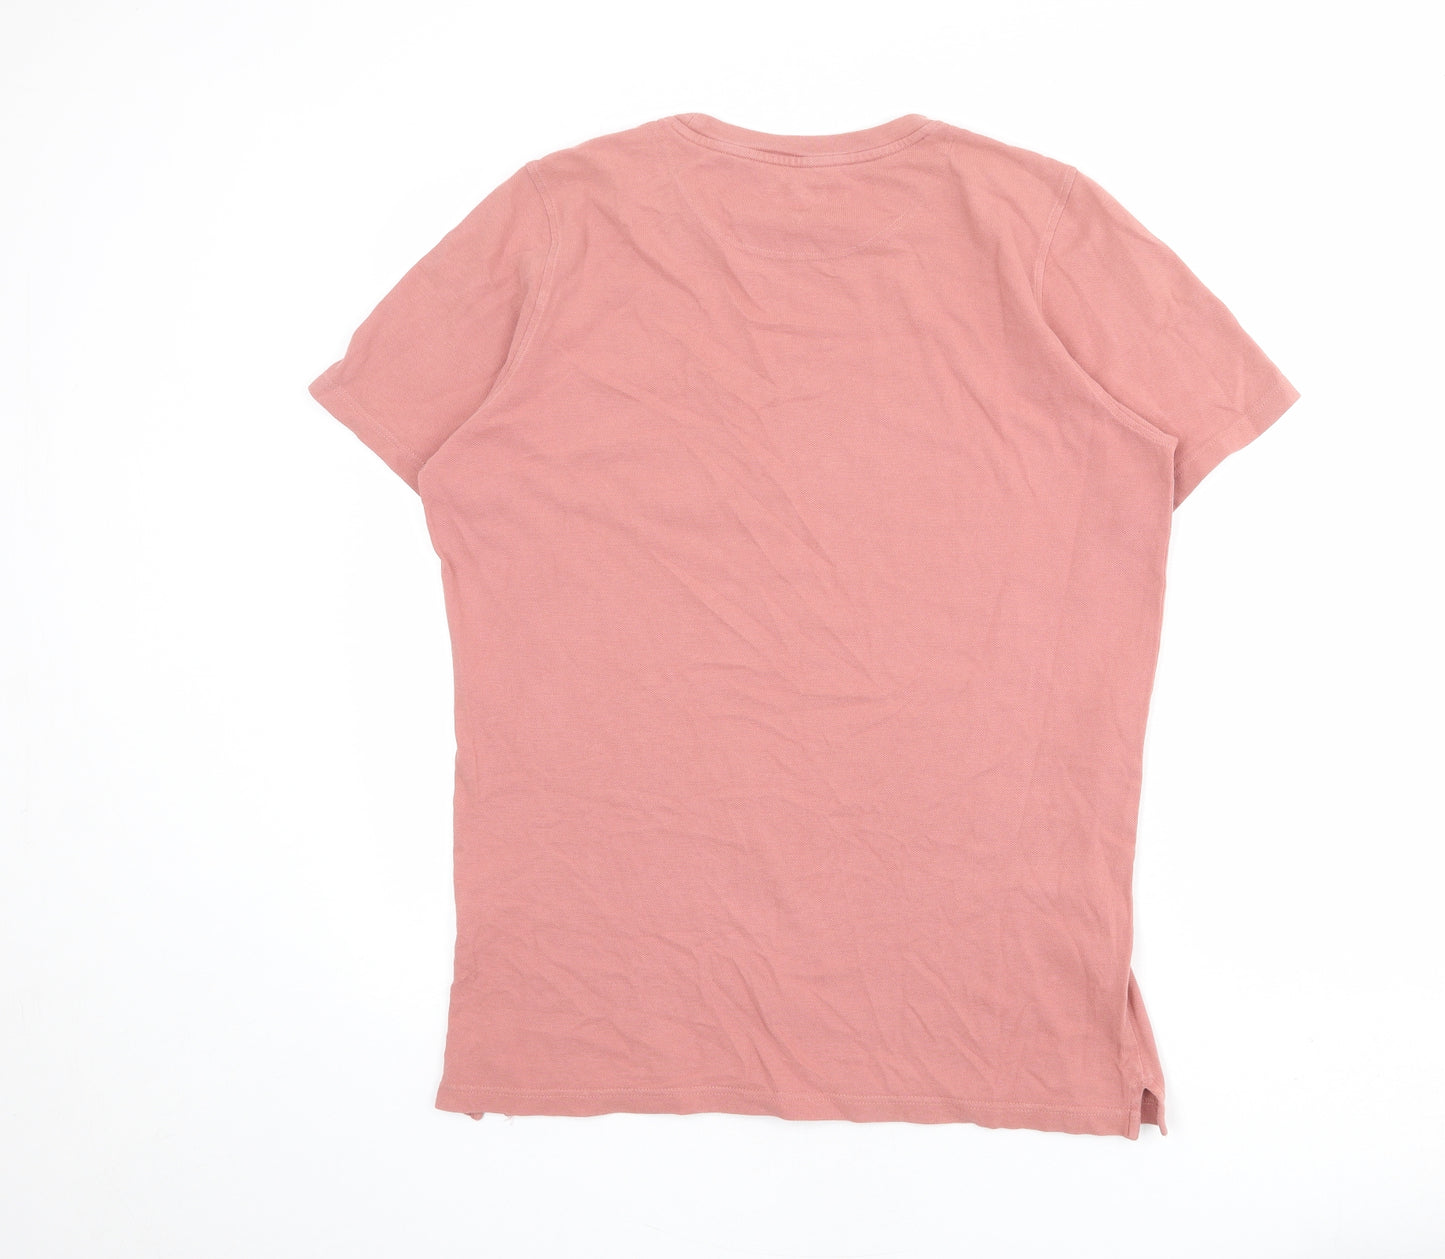 Joseph Turner Mens Pink Cotton T-Shirt Size S Round Neck